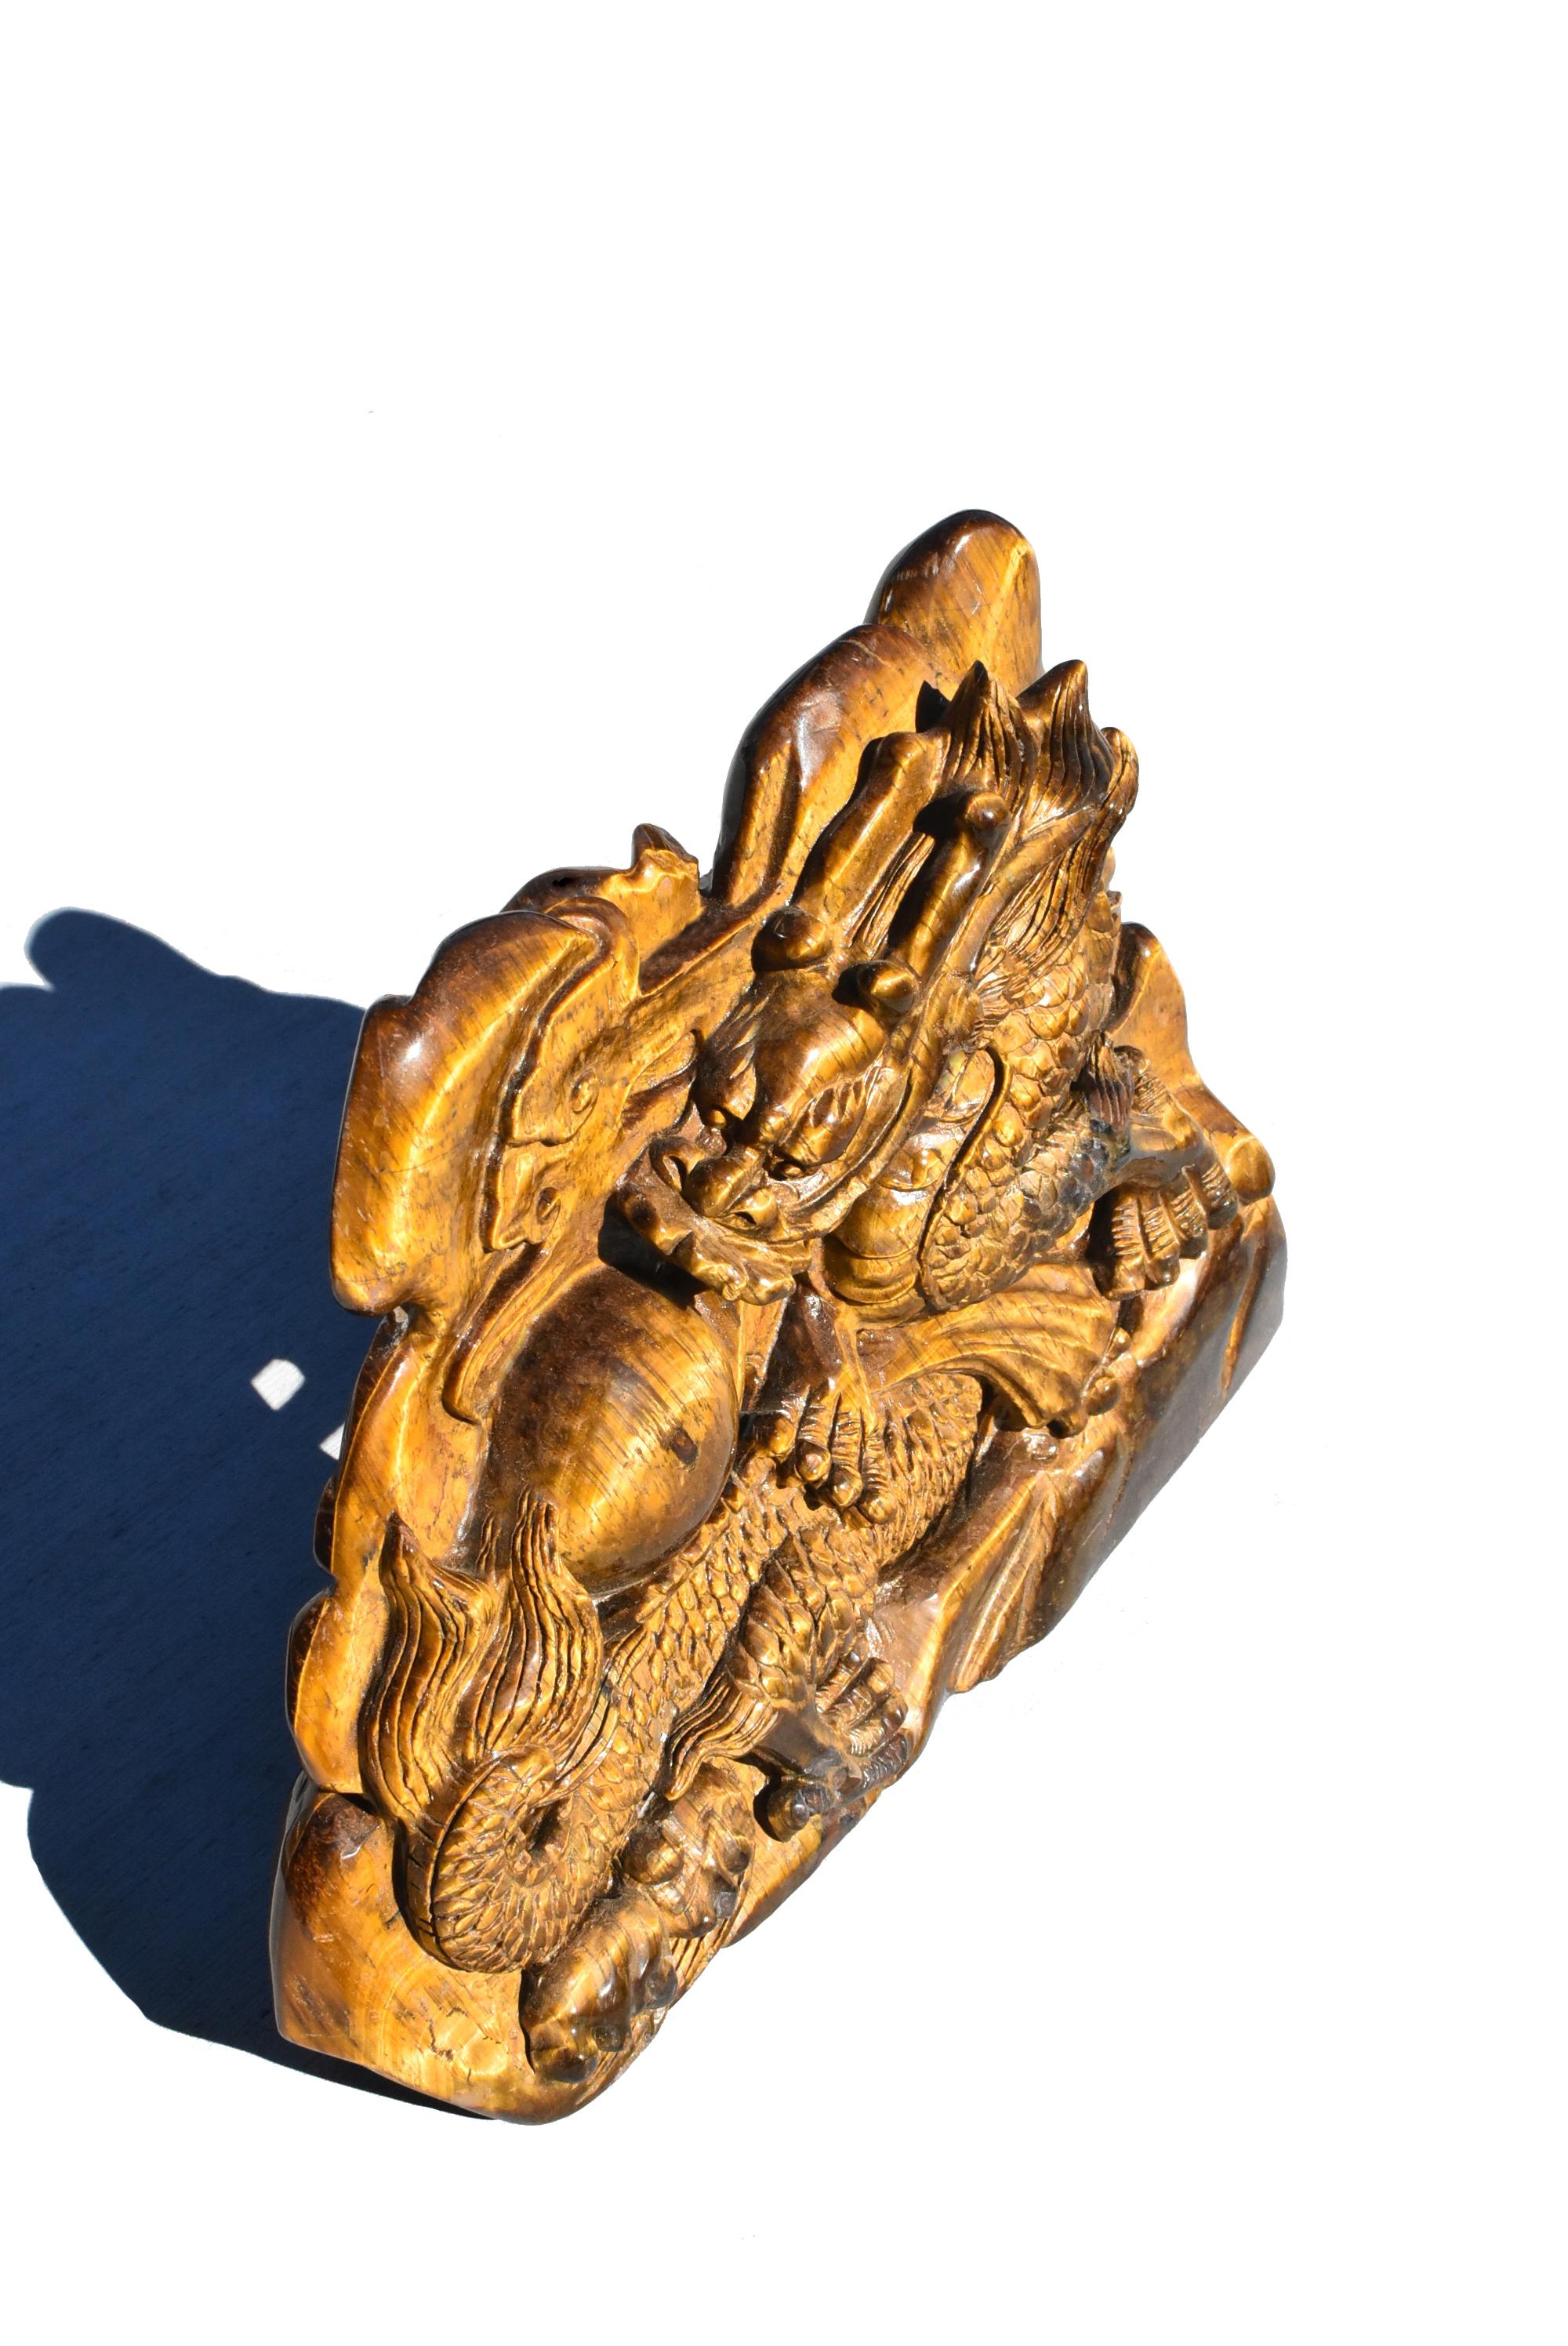 Quartz Tiger's Eye Dragon Statue 2.2 Lb Hand Carved For Sale